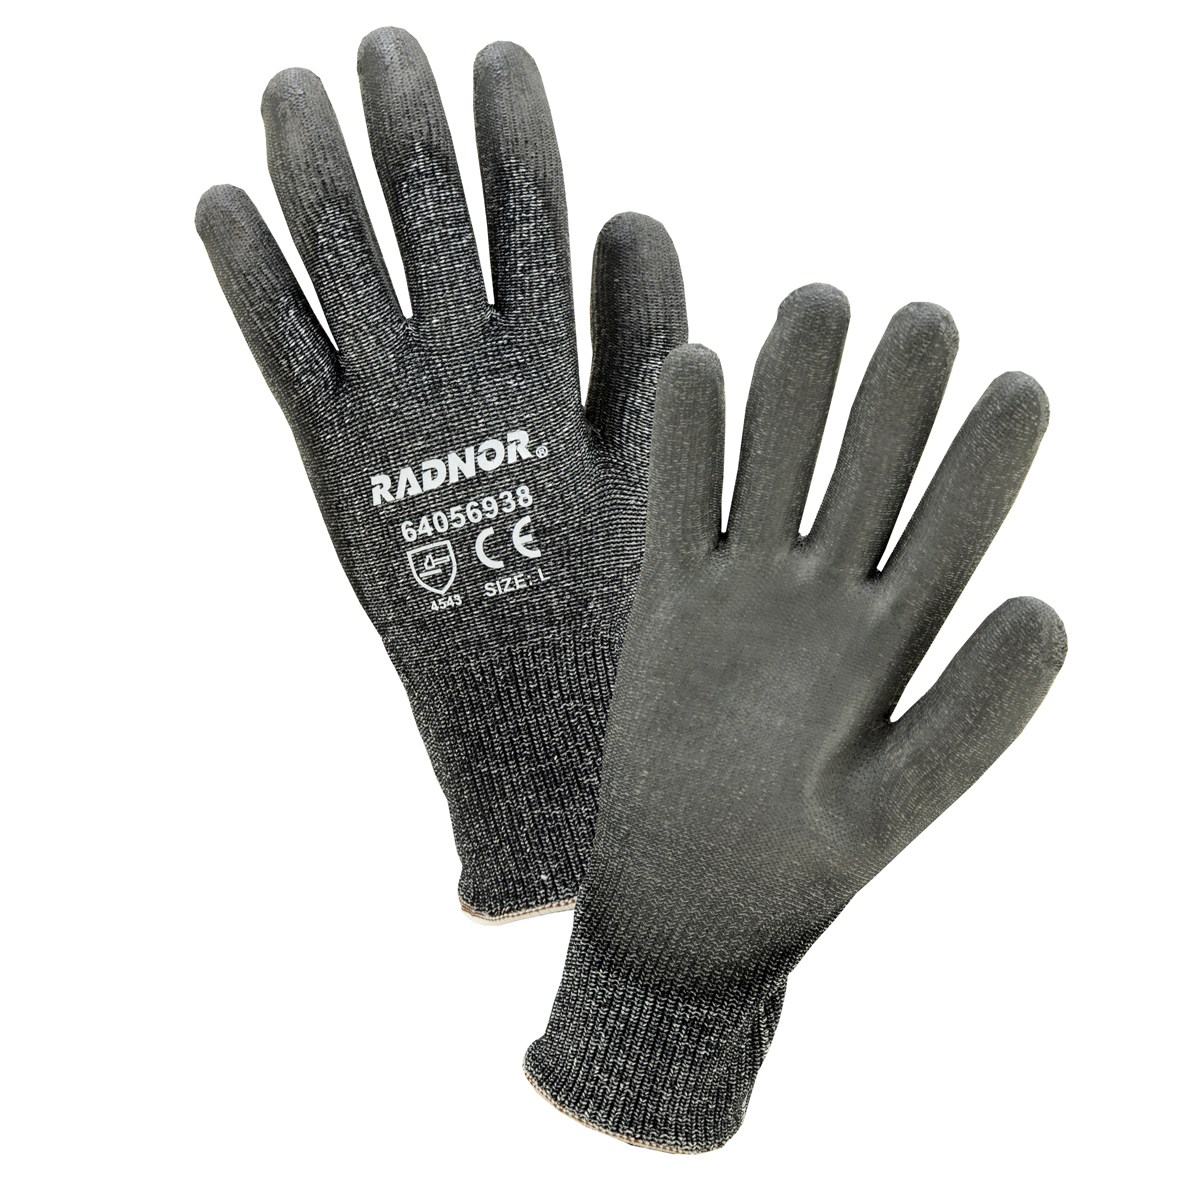 RADNOR® 2X 13 Gauge Glass, High Performance Polyethylene And Nylon Cut Resistant Gloves With Polyurethane Coating